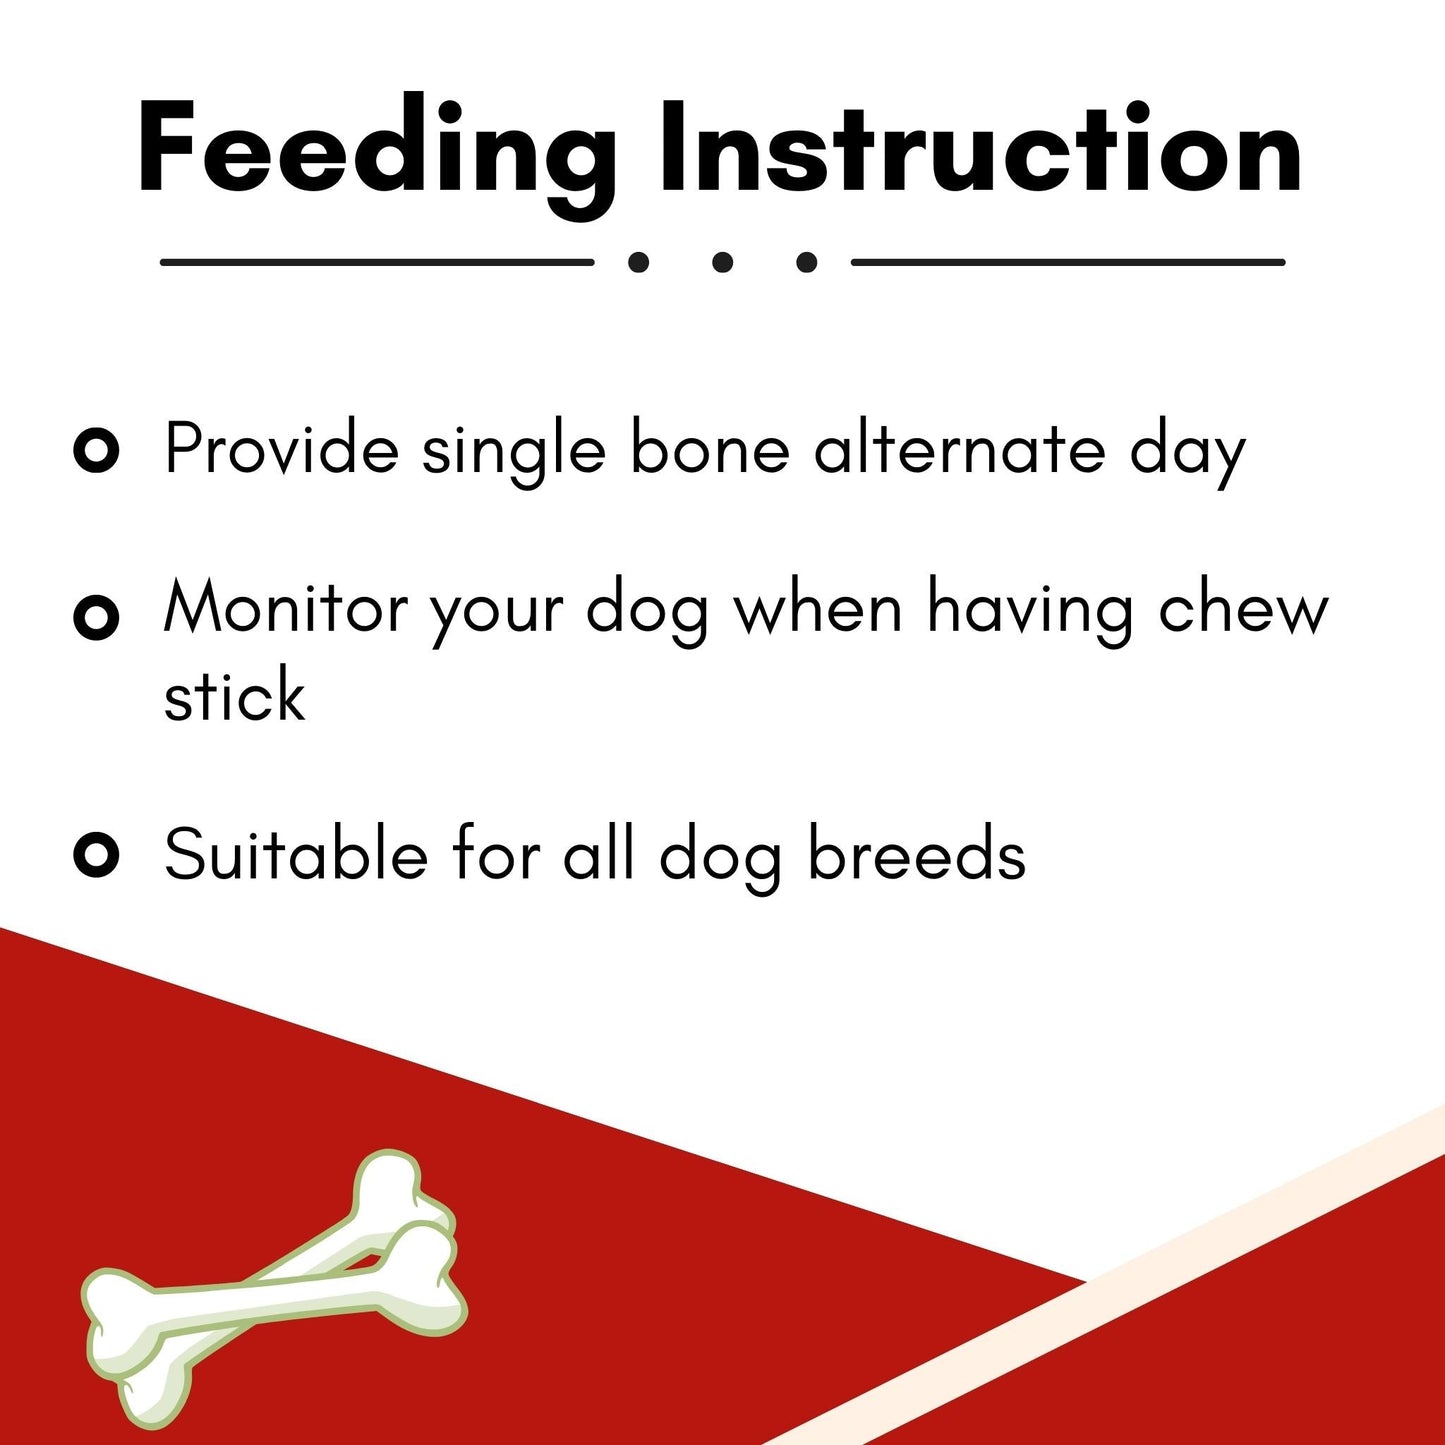 Foodie Puppies Chompsters Rawhide Bone for Dogs - 5inch Bone, 20Kg